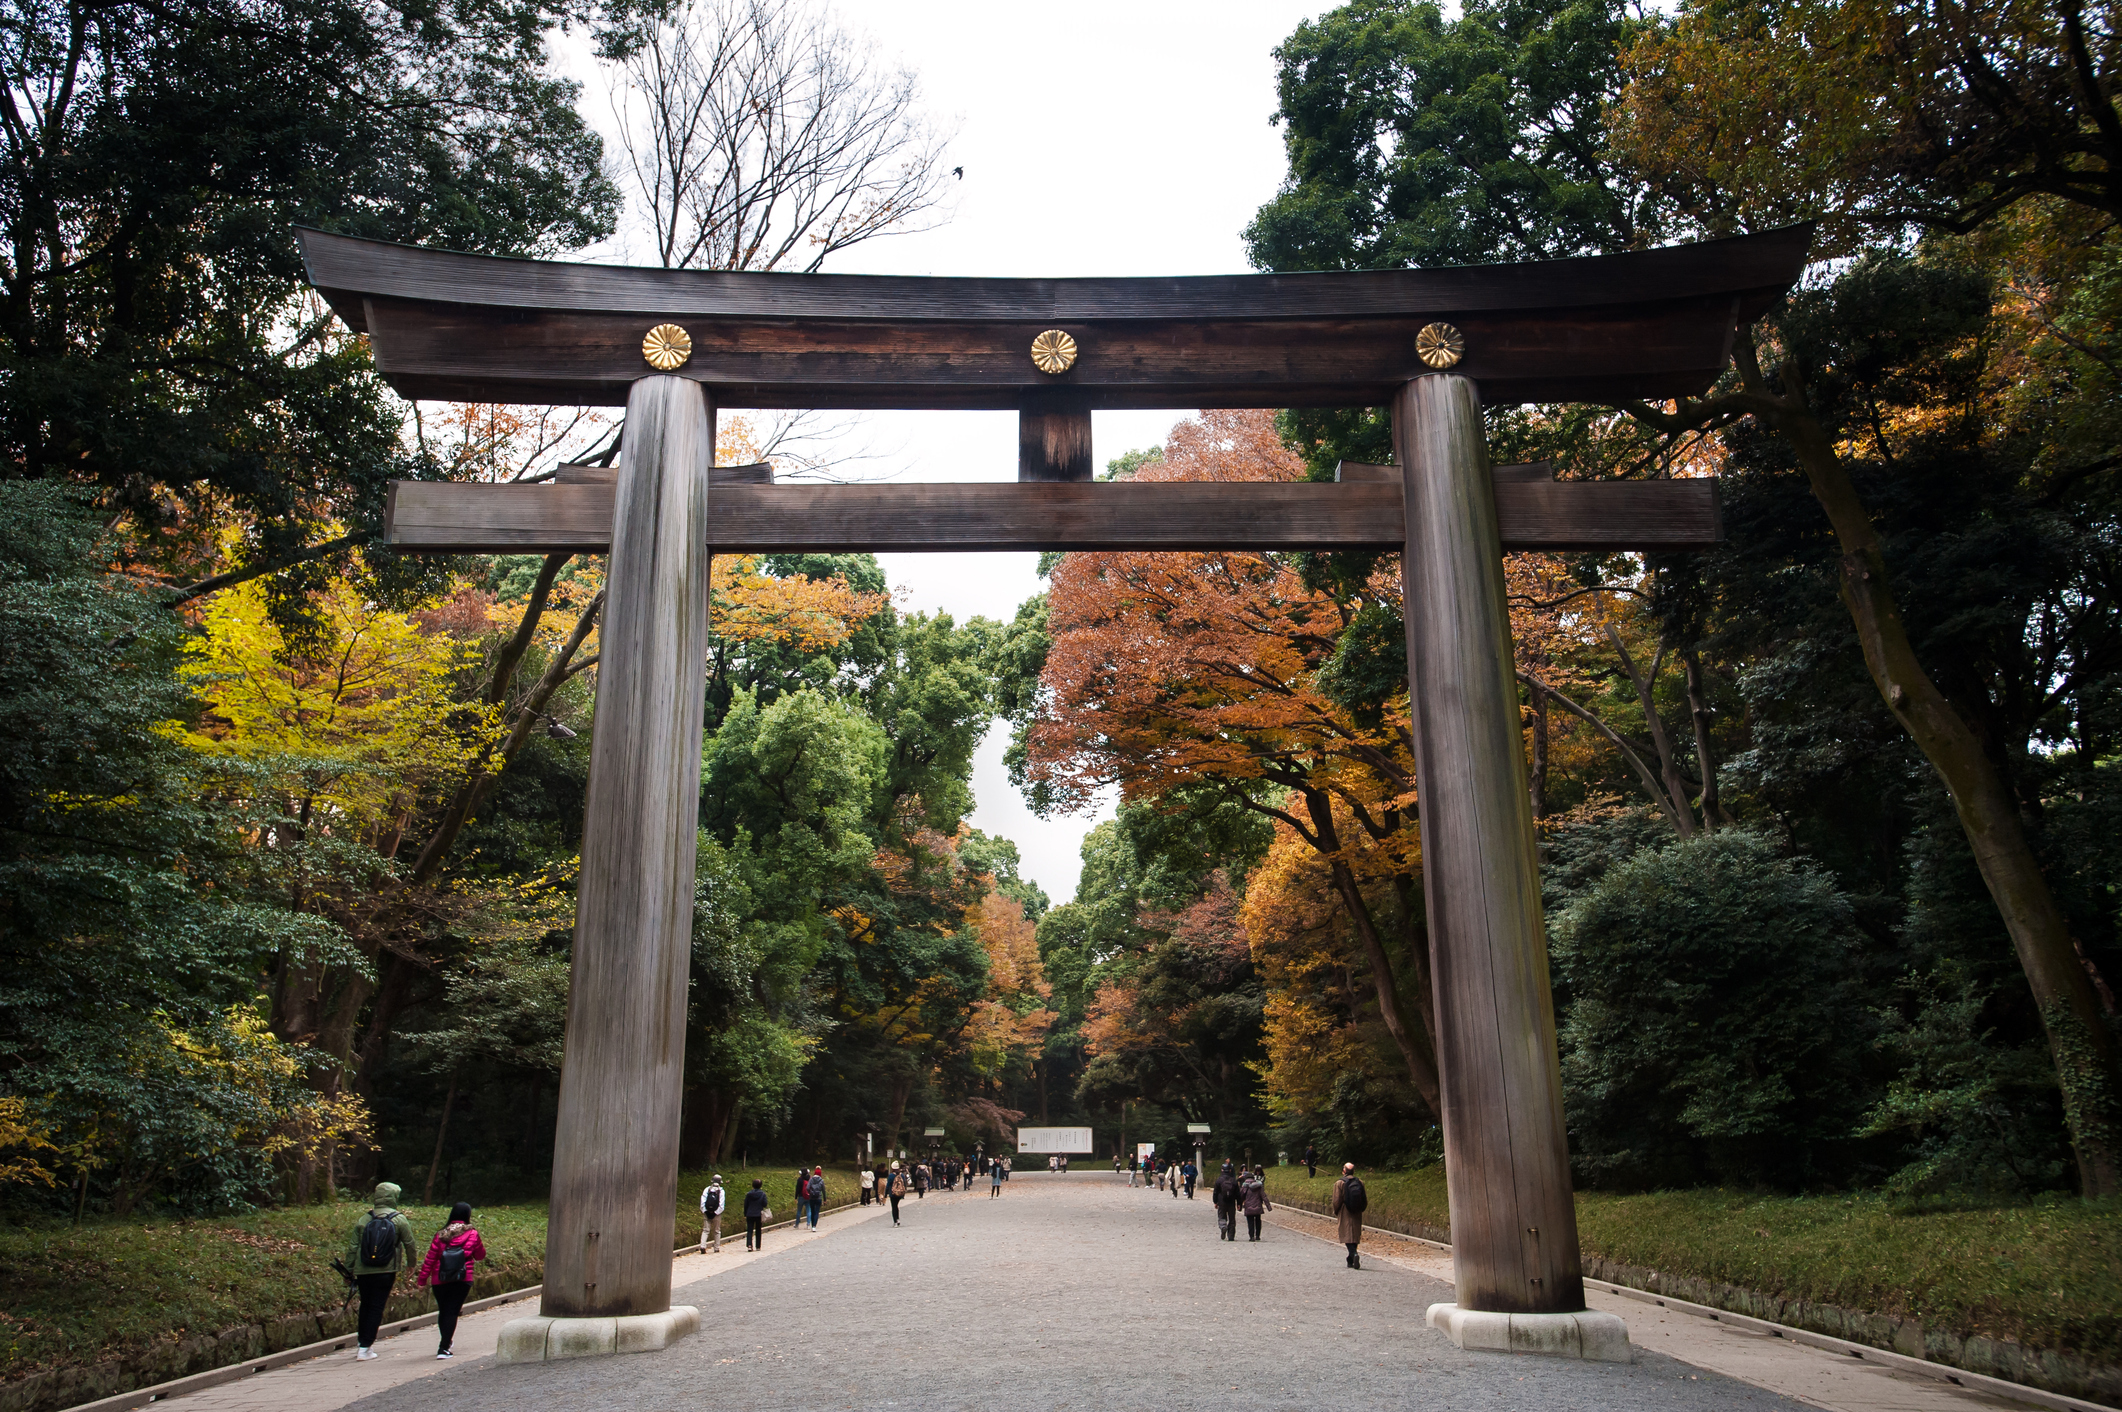 Large torii gate at the entrance to the Meiji Shrine, Shibuya, Tokyo, Japan